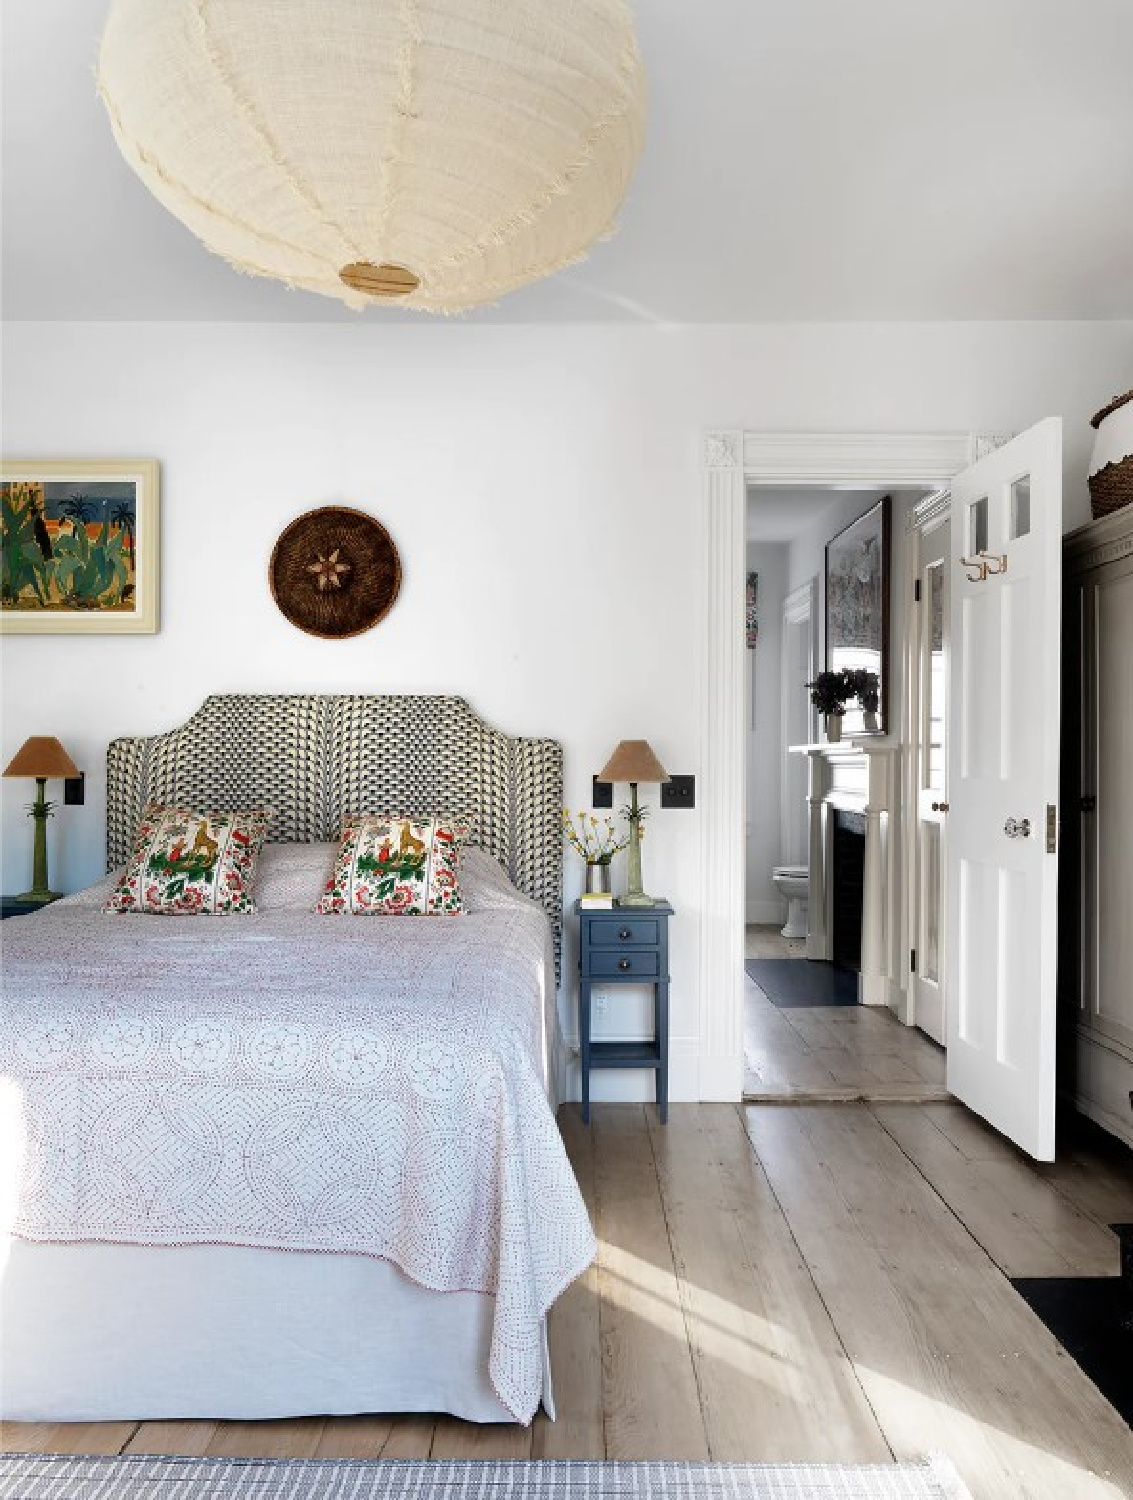 Serene and charming bedroom by Beata Heuman; photo: Simon Brown.